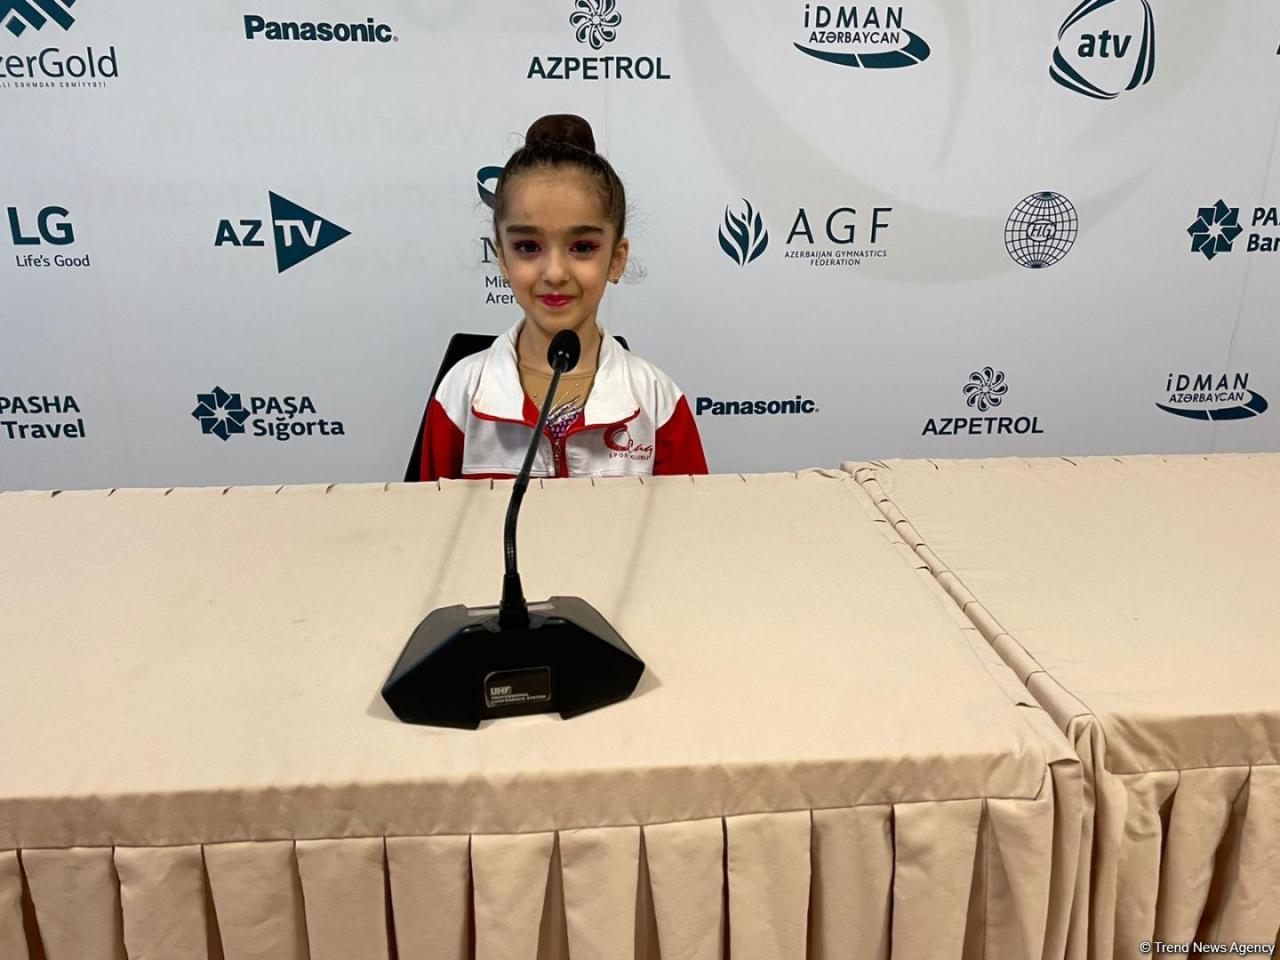 Baku Rhythmic Gymnastics Championship participant speaks about her performance at National Gymnastics Arena